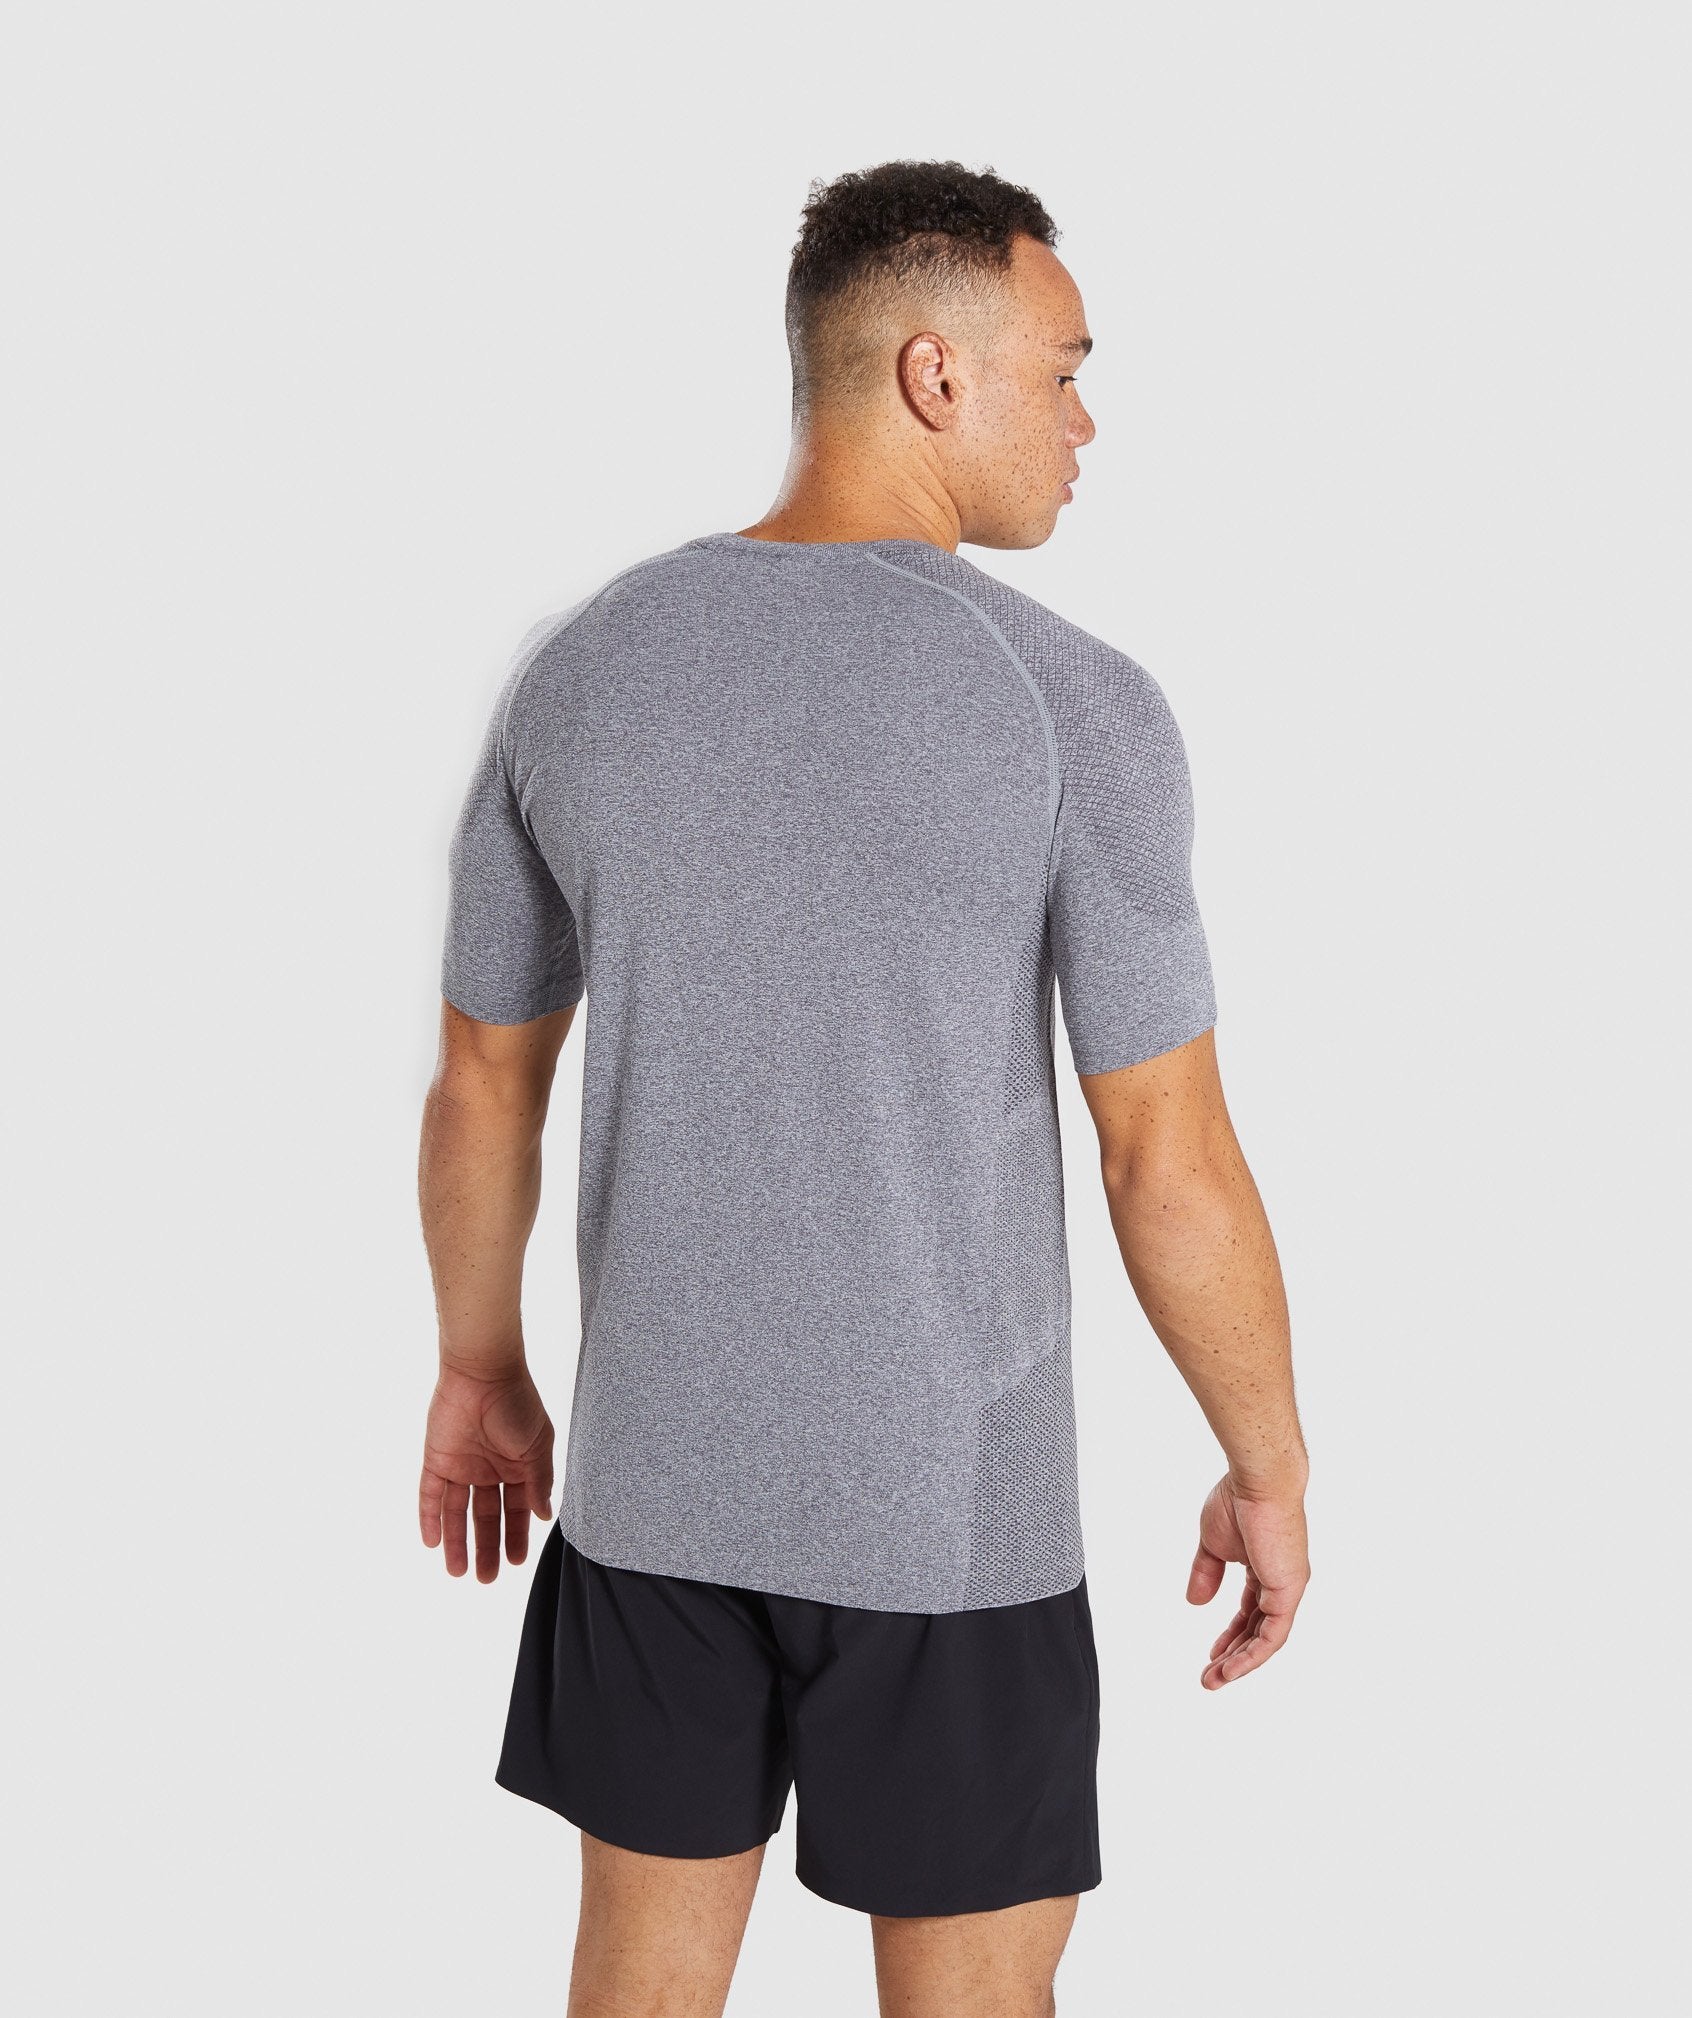 Define Seamless T-Shirt in Smokey Grey Marl - view 2